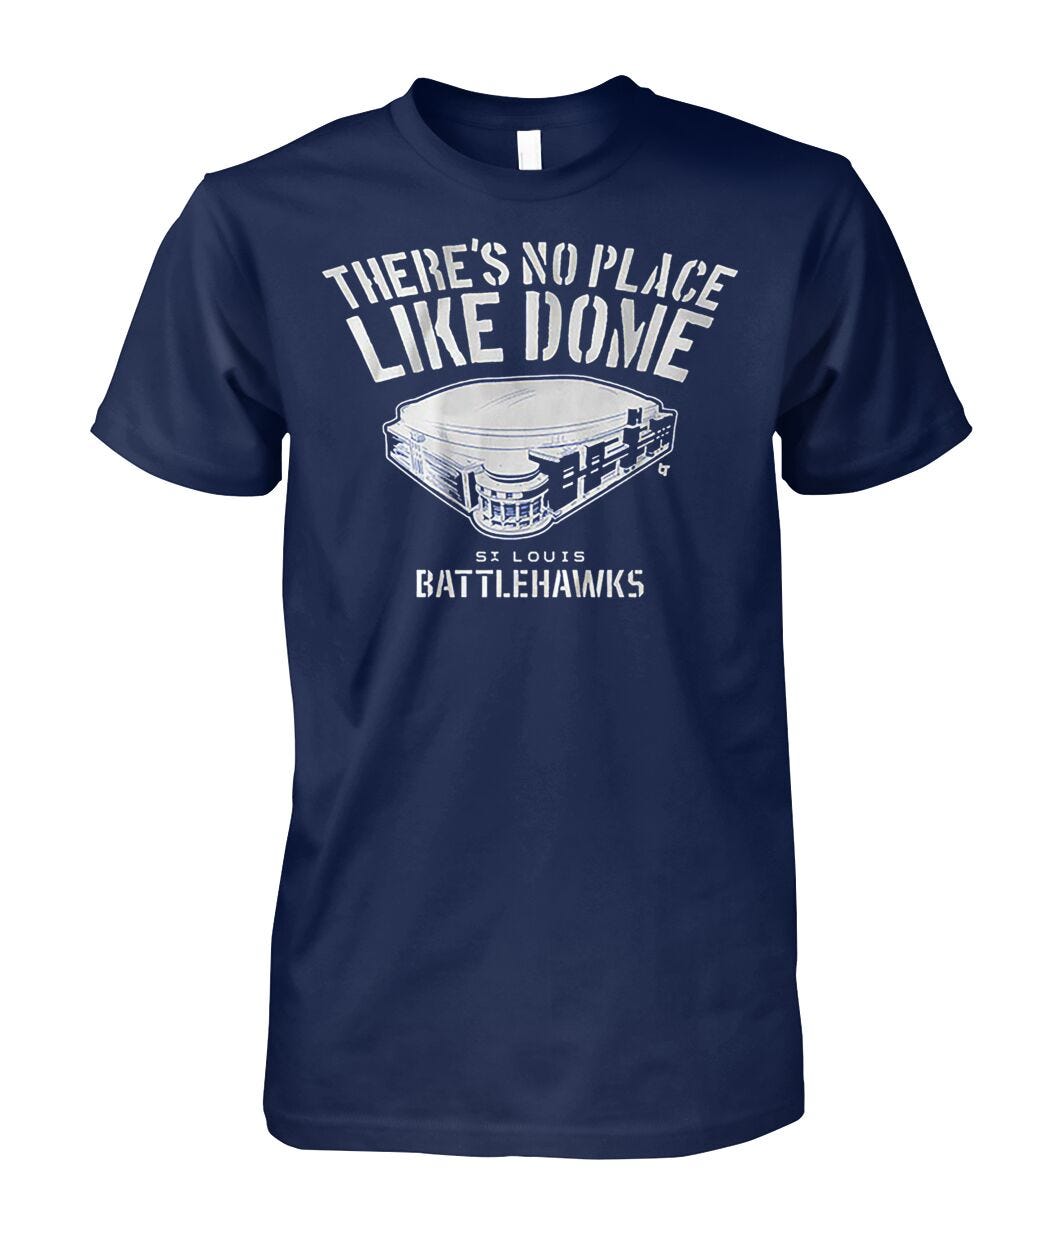 St. Louis Battlehawks There's No Place Like Dome Shirt